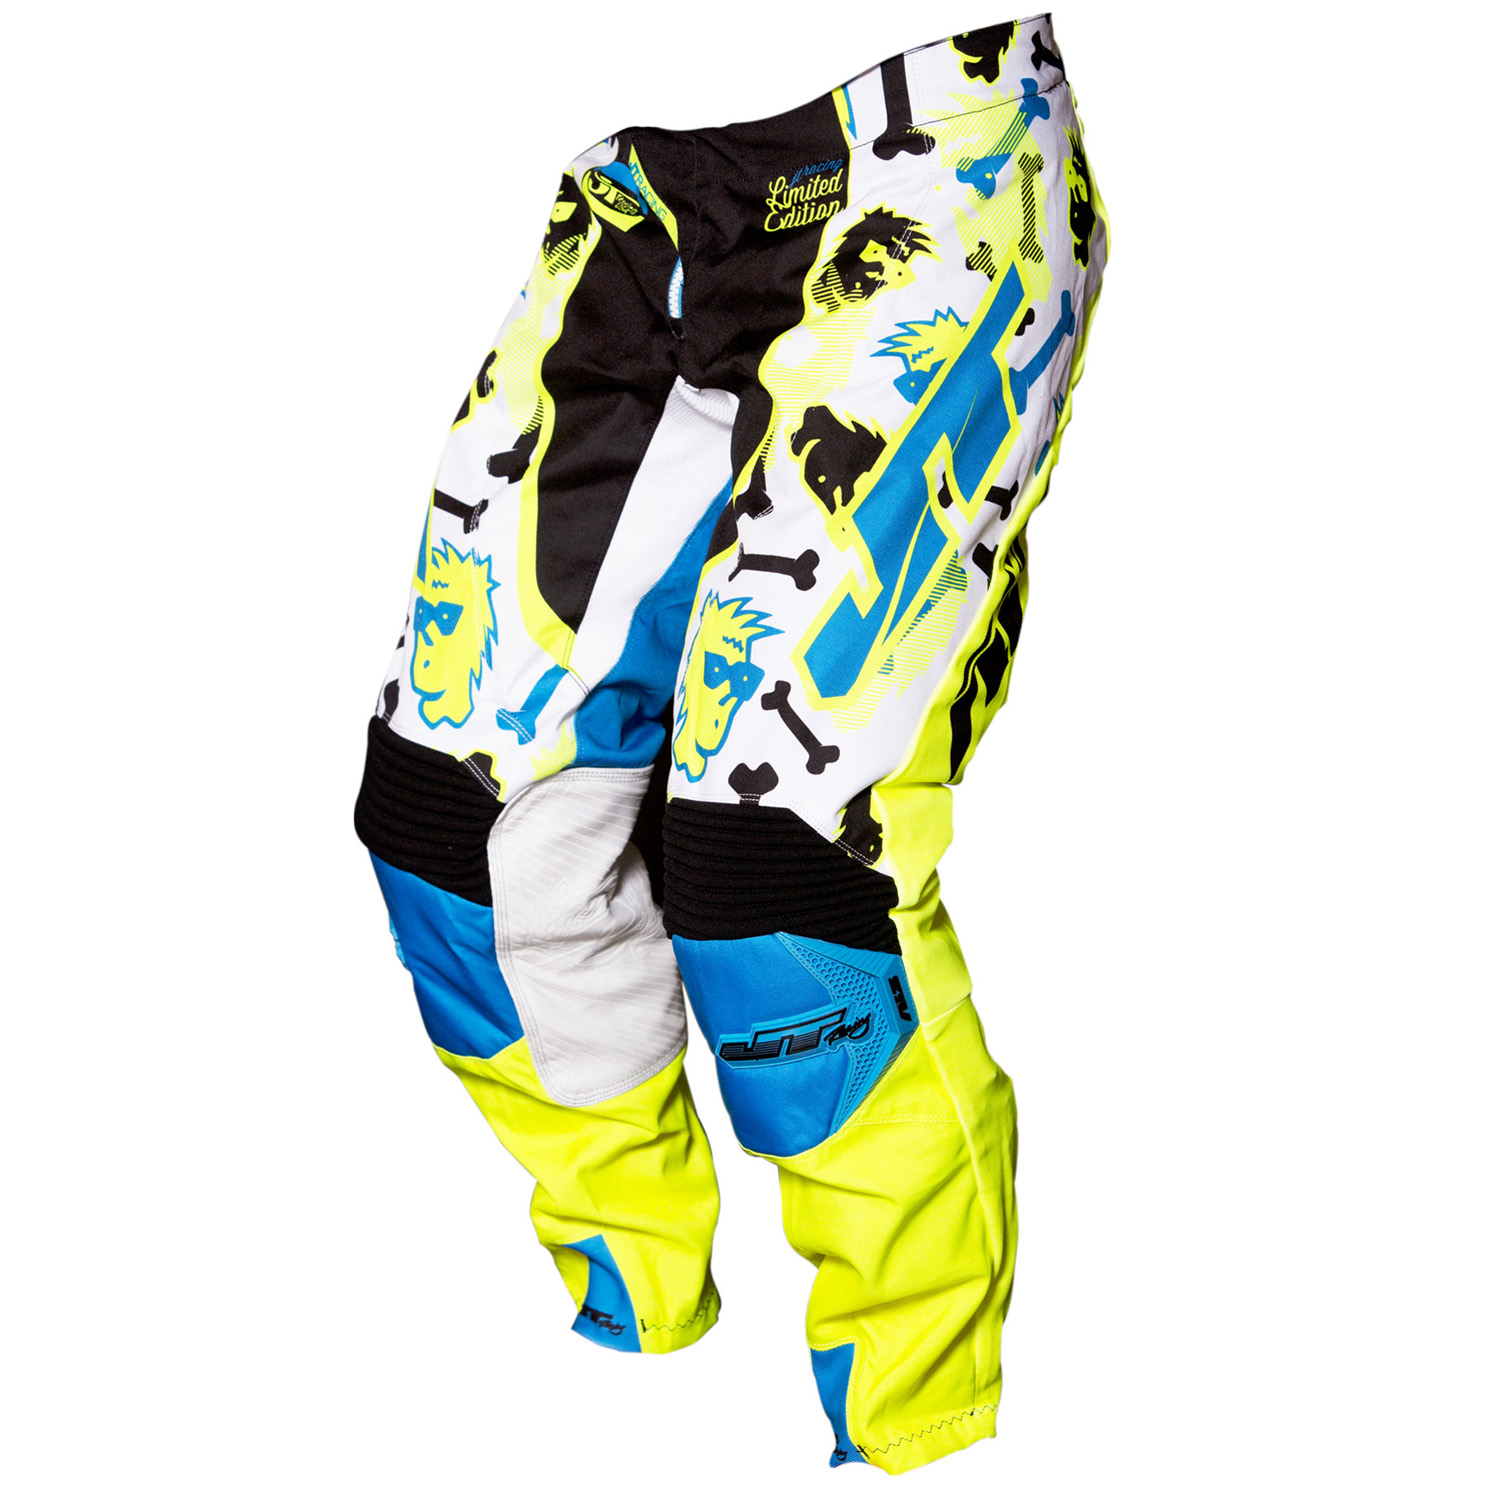 JT Racing USA Cross Pants HyperLite Bad Bones Black/Neon Yellow/Cyan